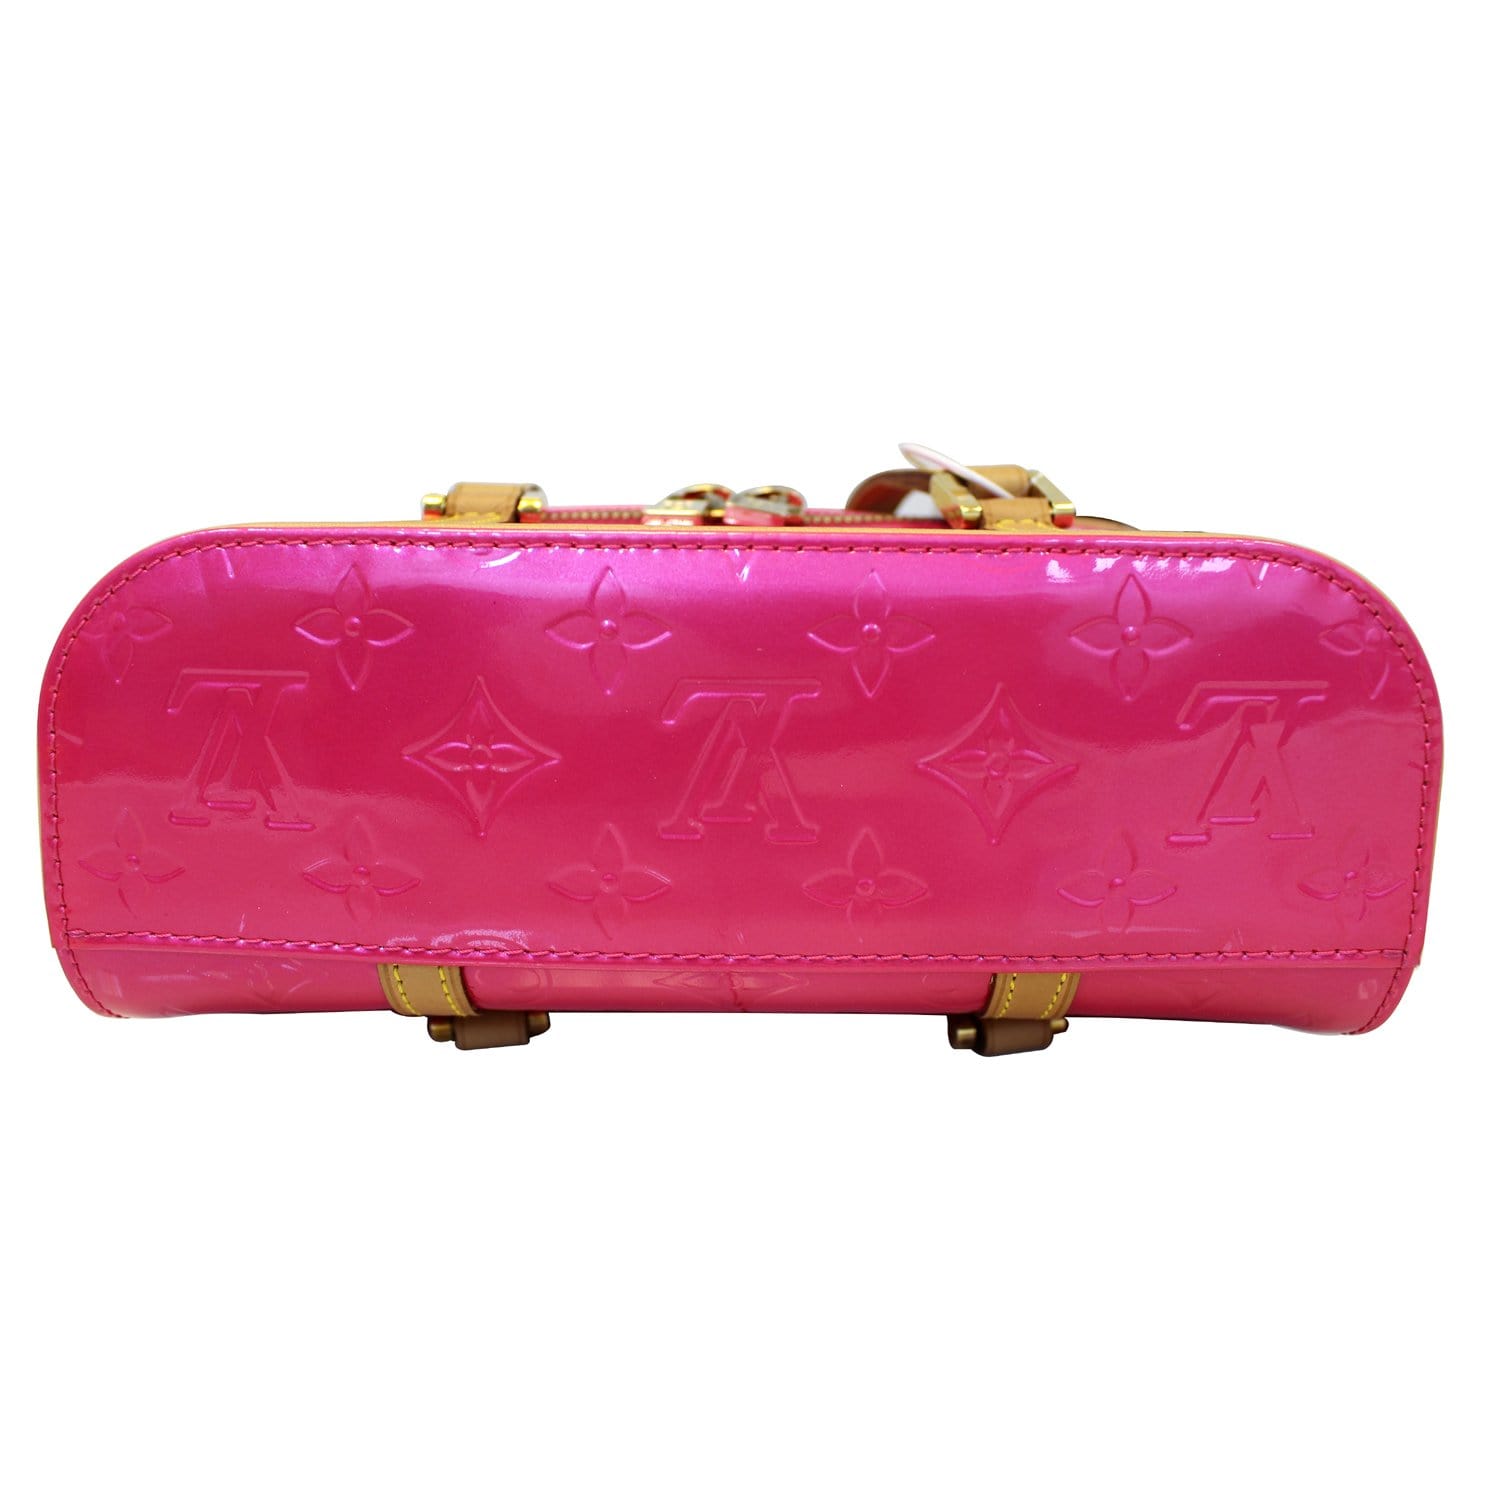 Louis Vuitton Pink Patent Leather Purse